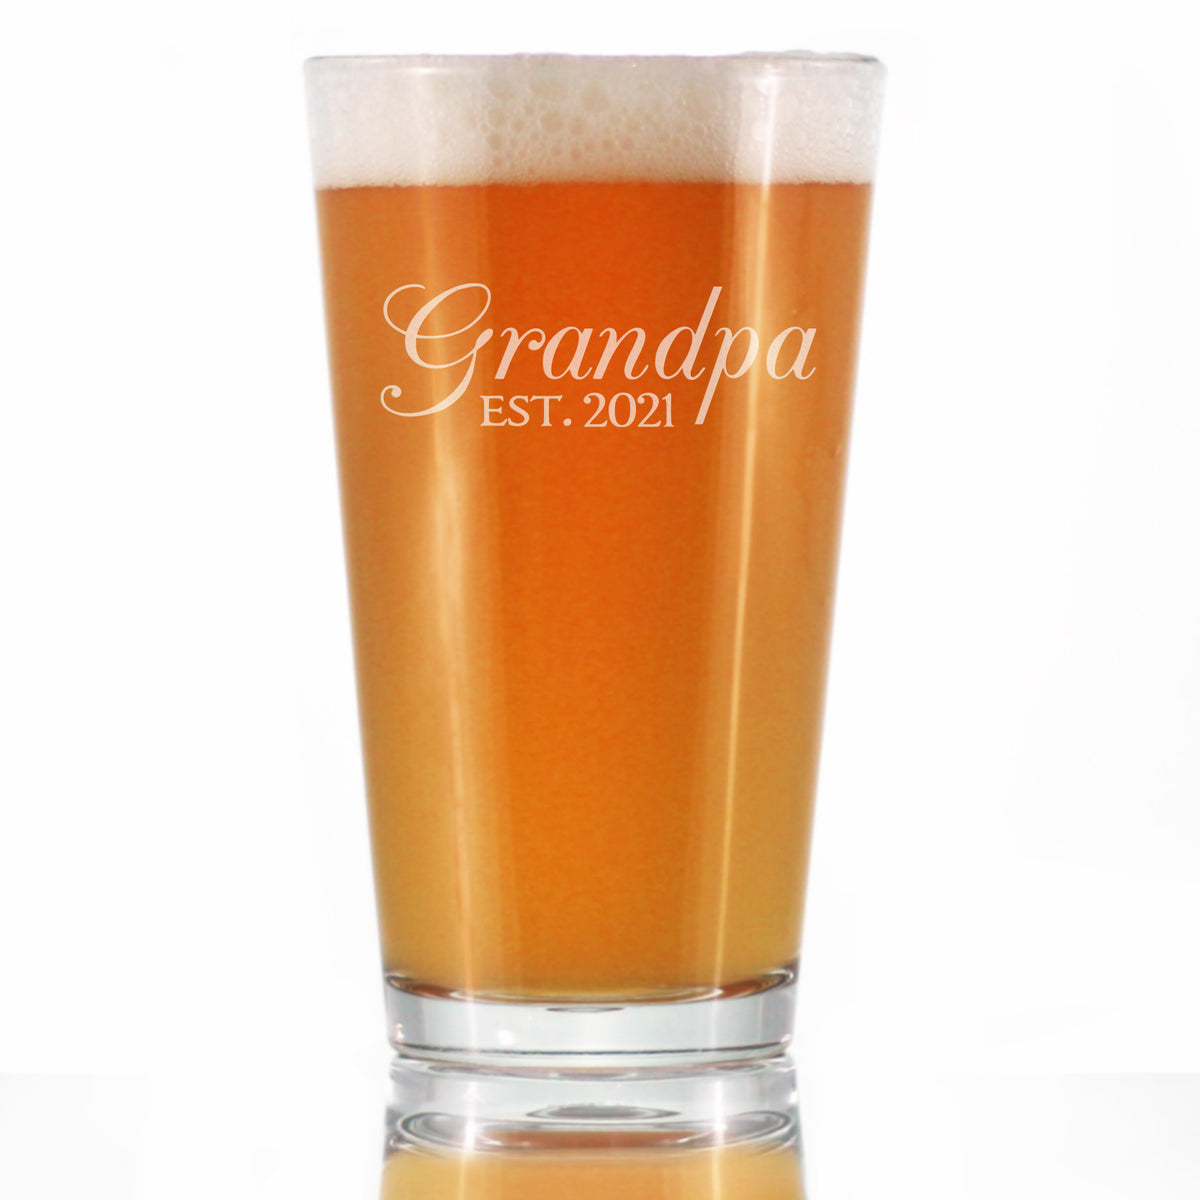 Grandpa Est 2021 - New Grandfather Pint Glass Gift for First Time Grandparents - Decorative 16 Oz Glasses